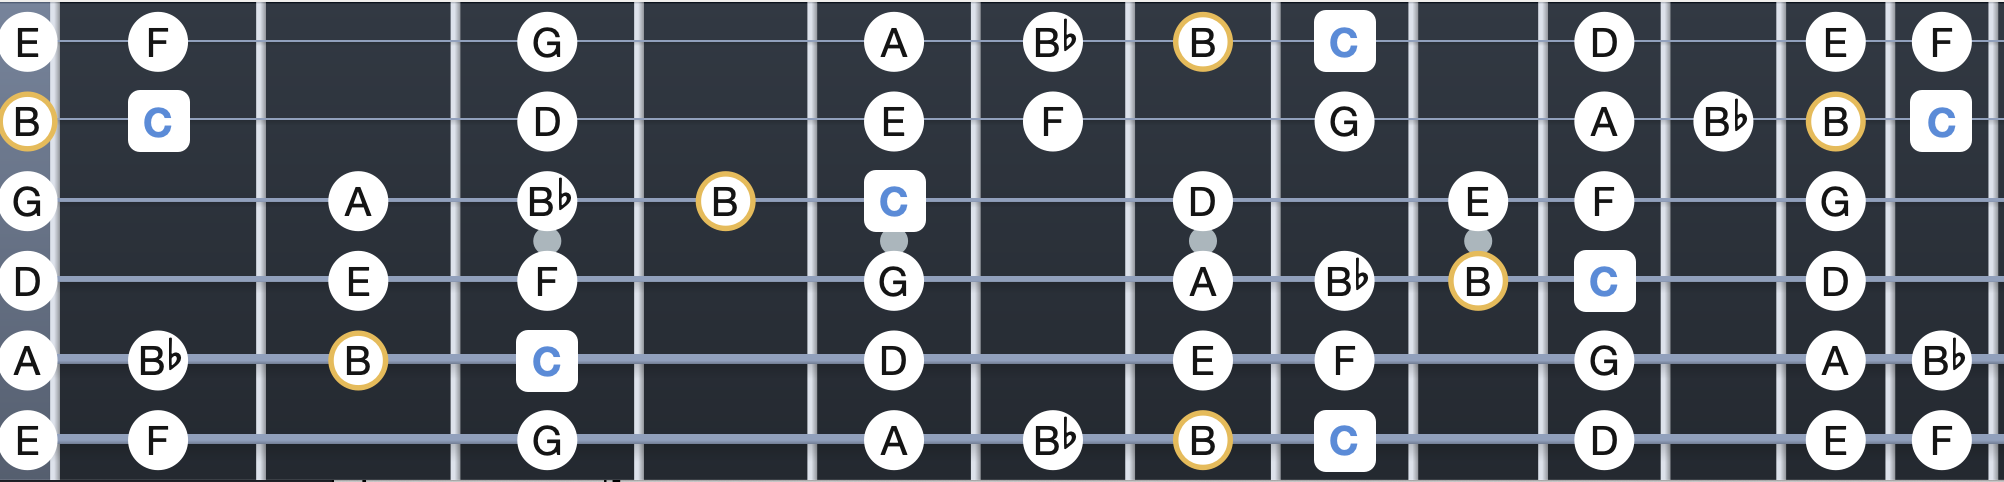 C Dominant Bebop Scale on Guitar